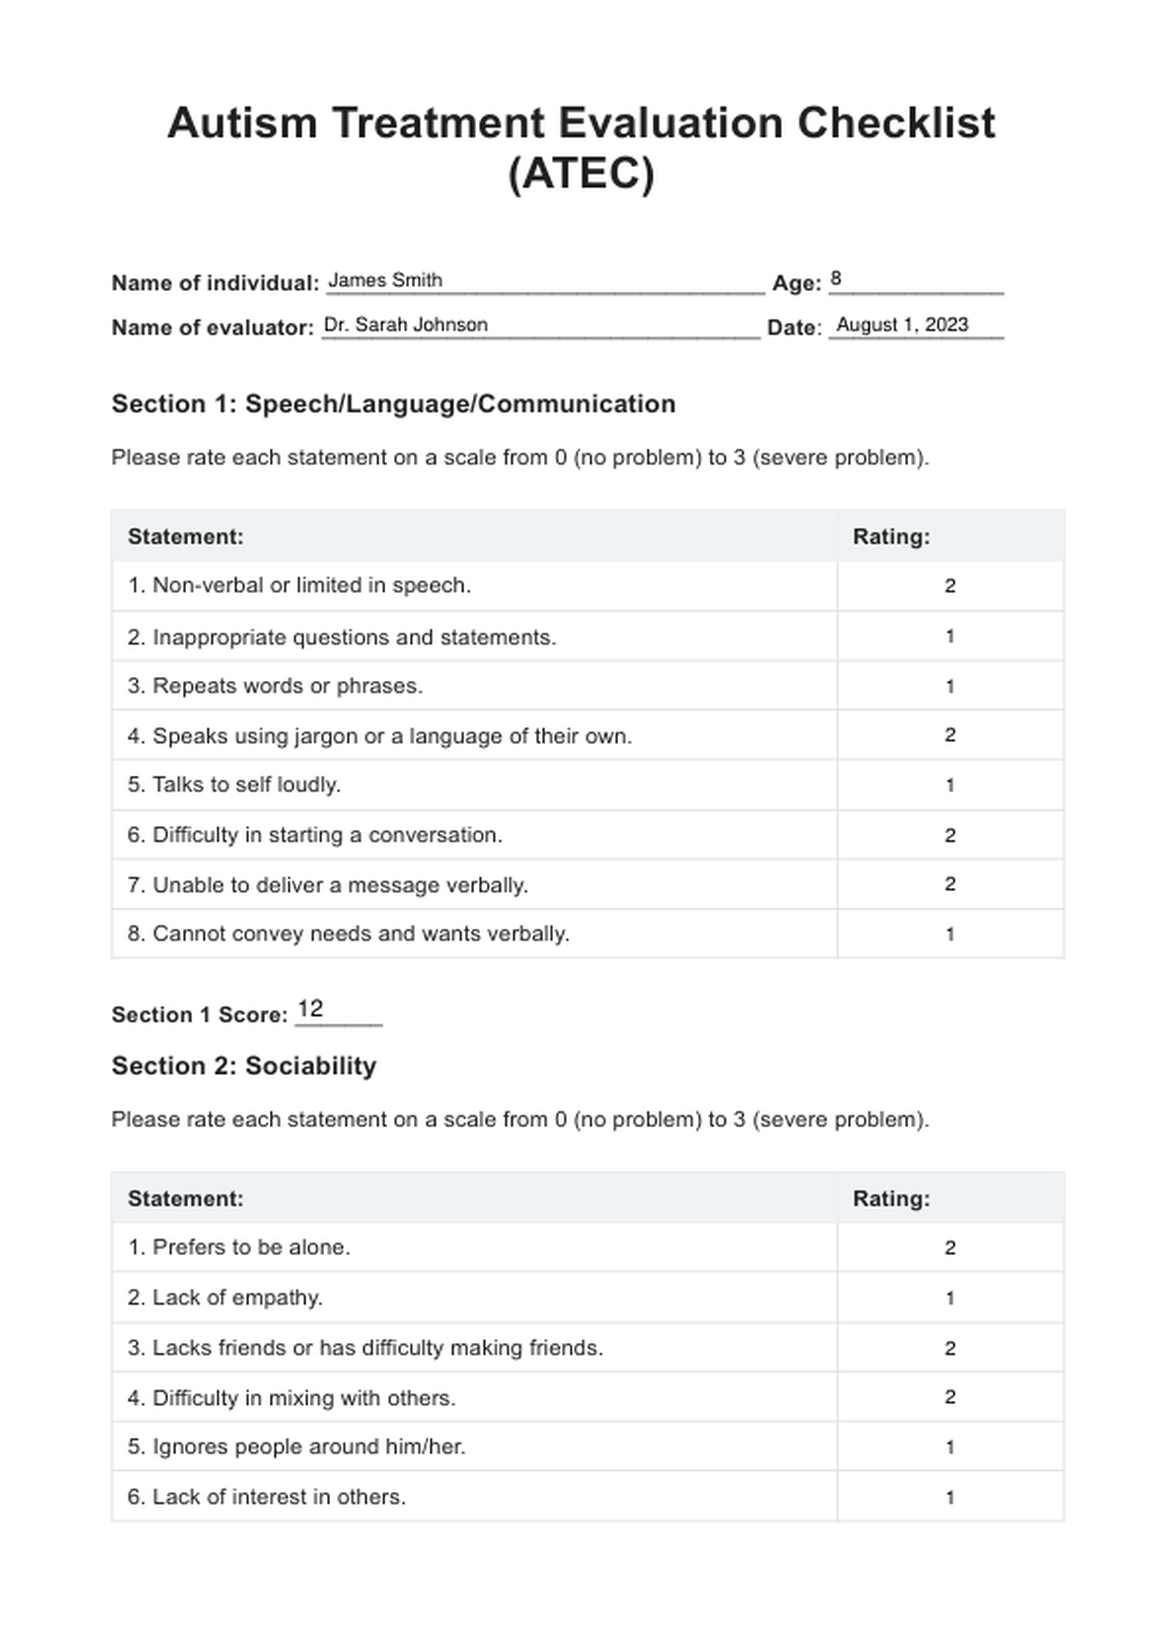 Autism Treatment Evaluation Checklist (ATEC) PDF Example